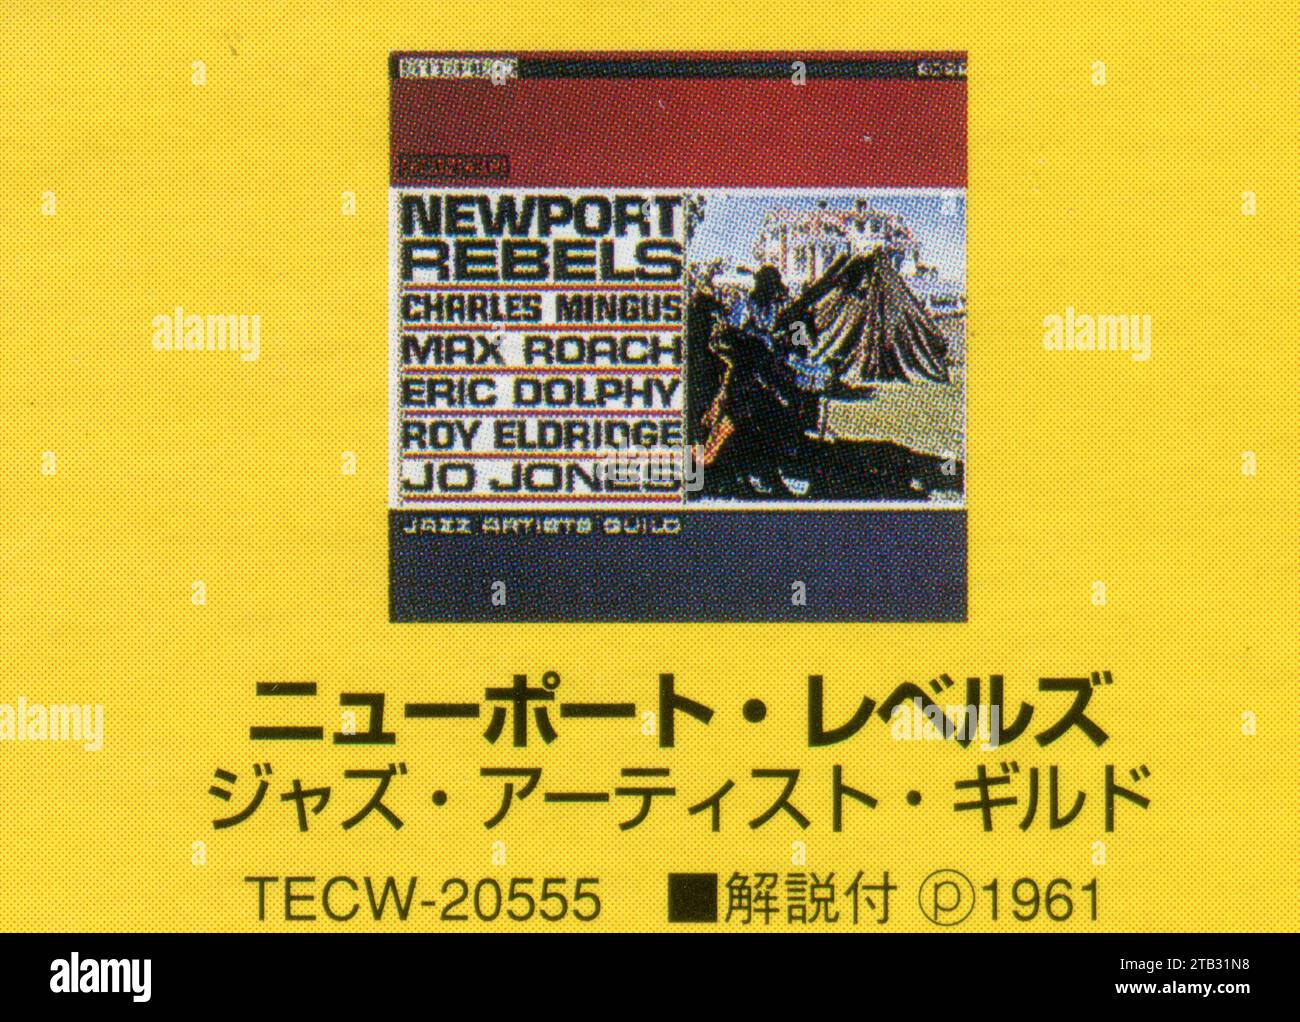 CD: Charles Mingus, Max Roach, Eric Dolphy, Roy Eldridge, Jo Jones – Newport Rebels. (TECW-20555), veröffentlicht am 23. Juli 1999. Details. Stockfoto